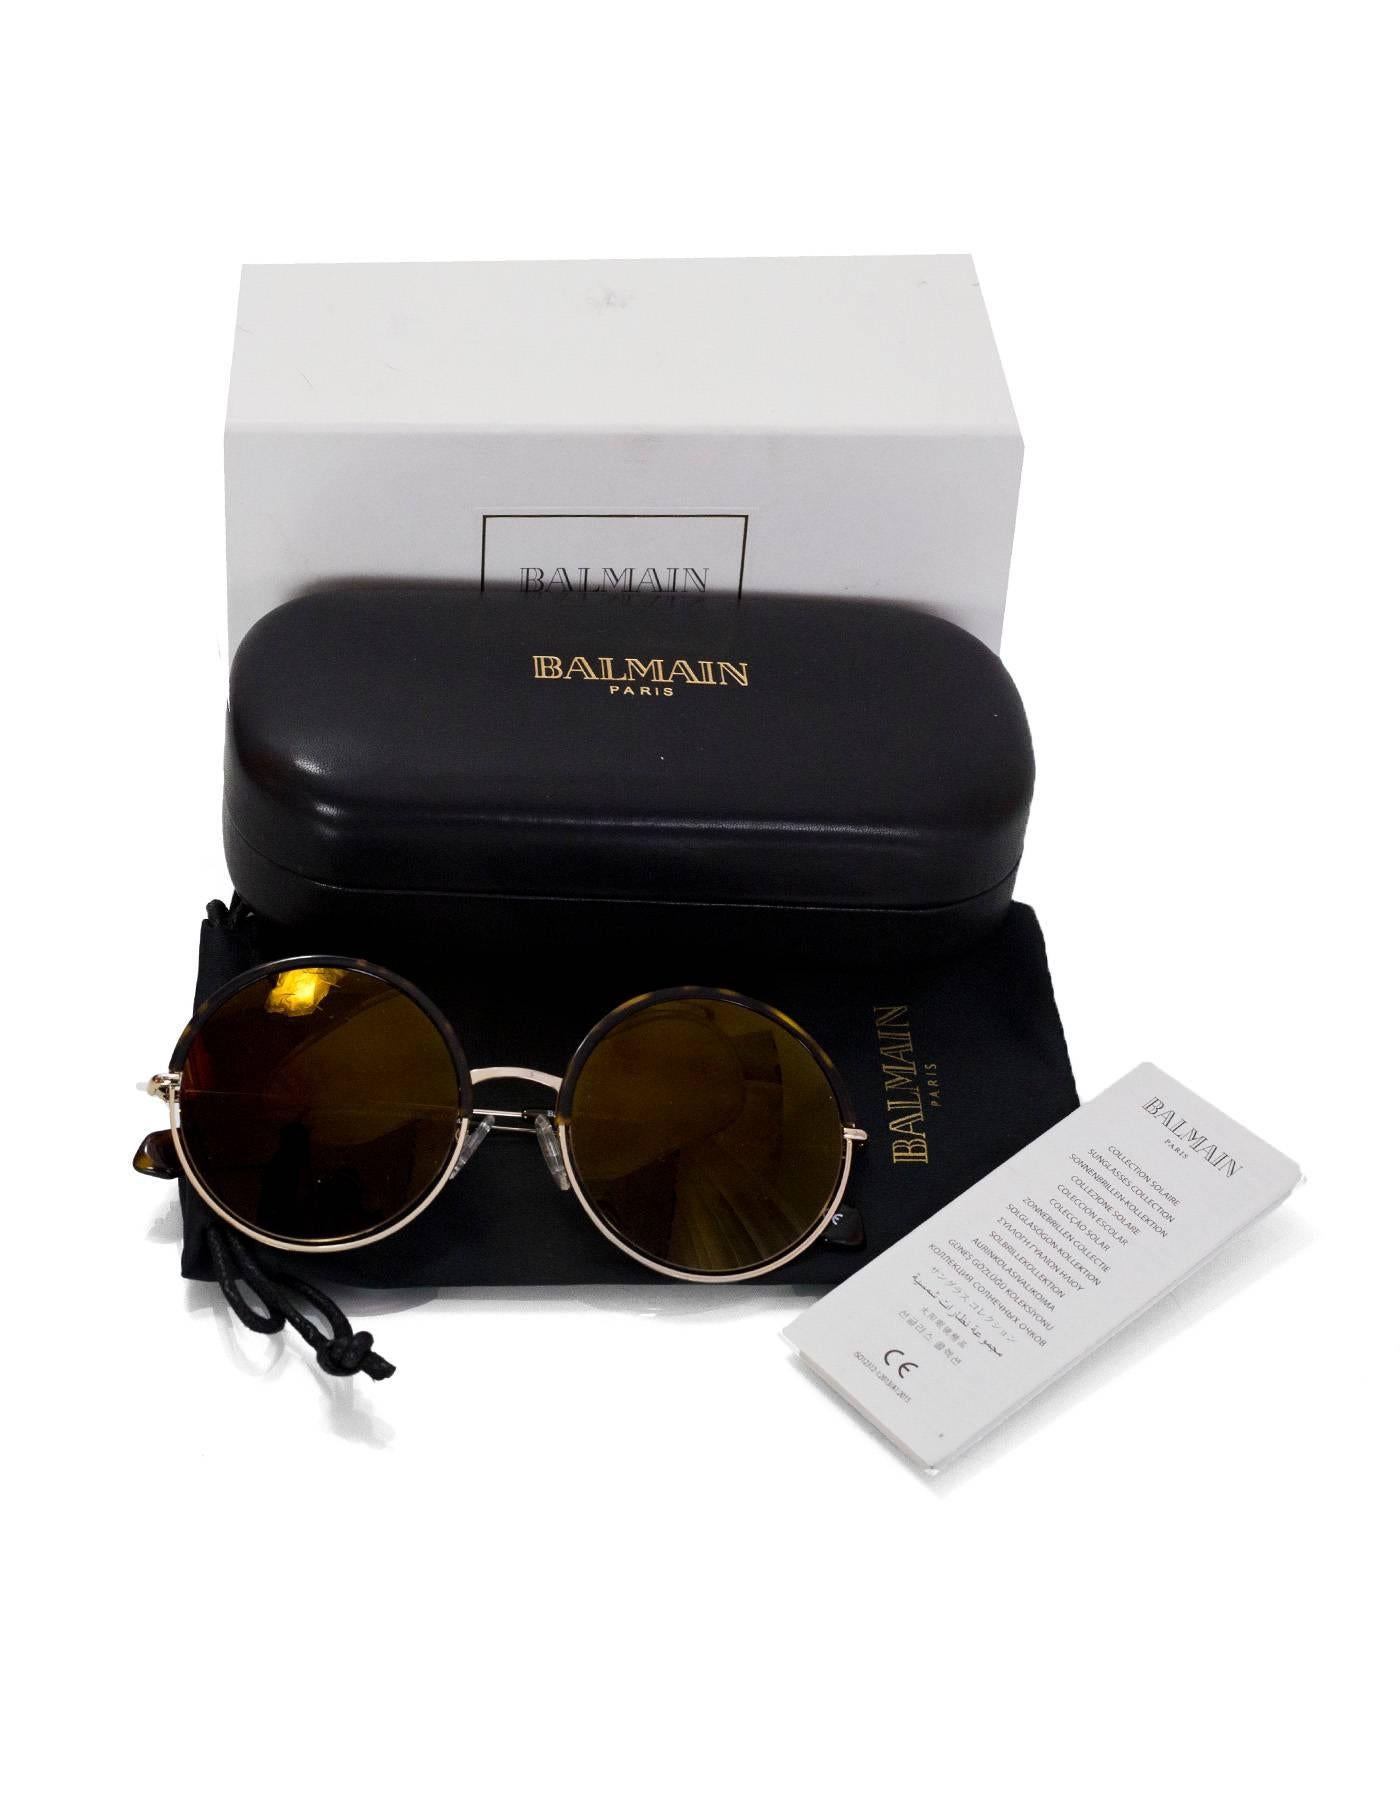 Balmain Tortoise & Goldtone Round Frame Sunglasses with Box, Case 1